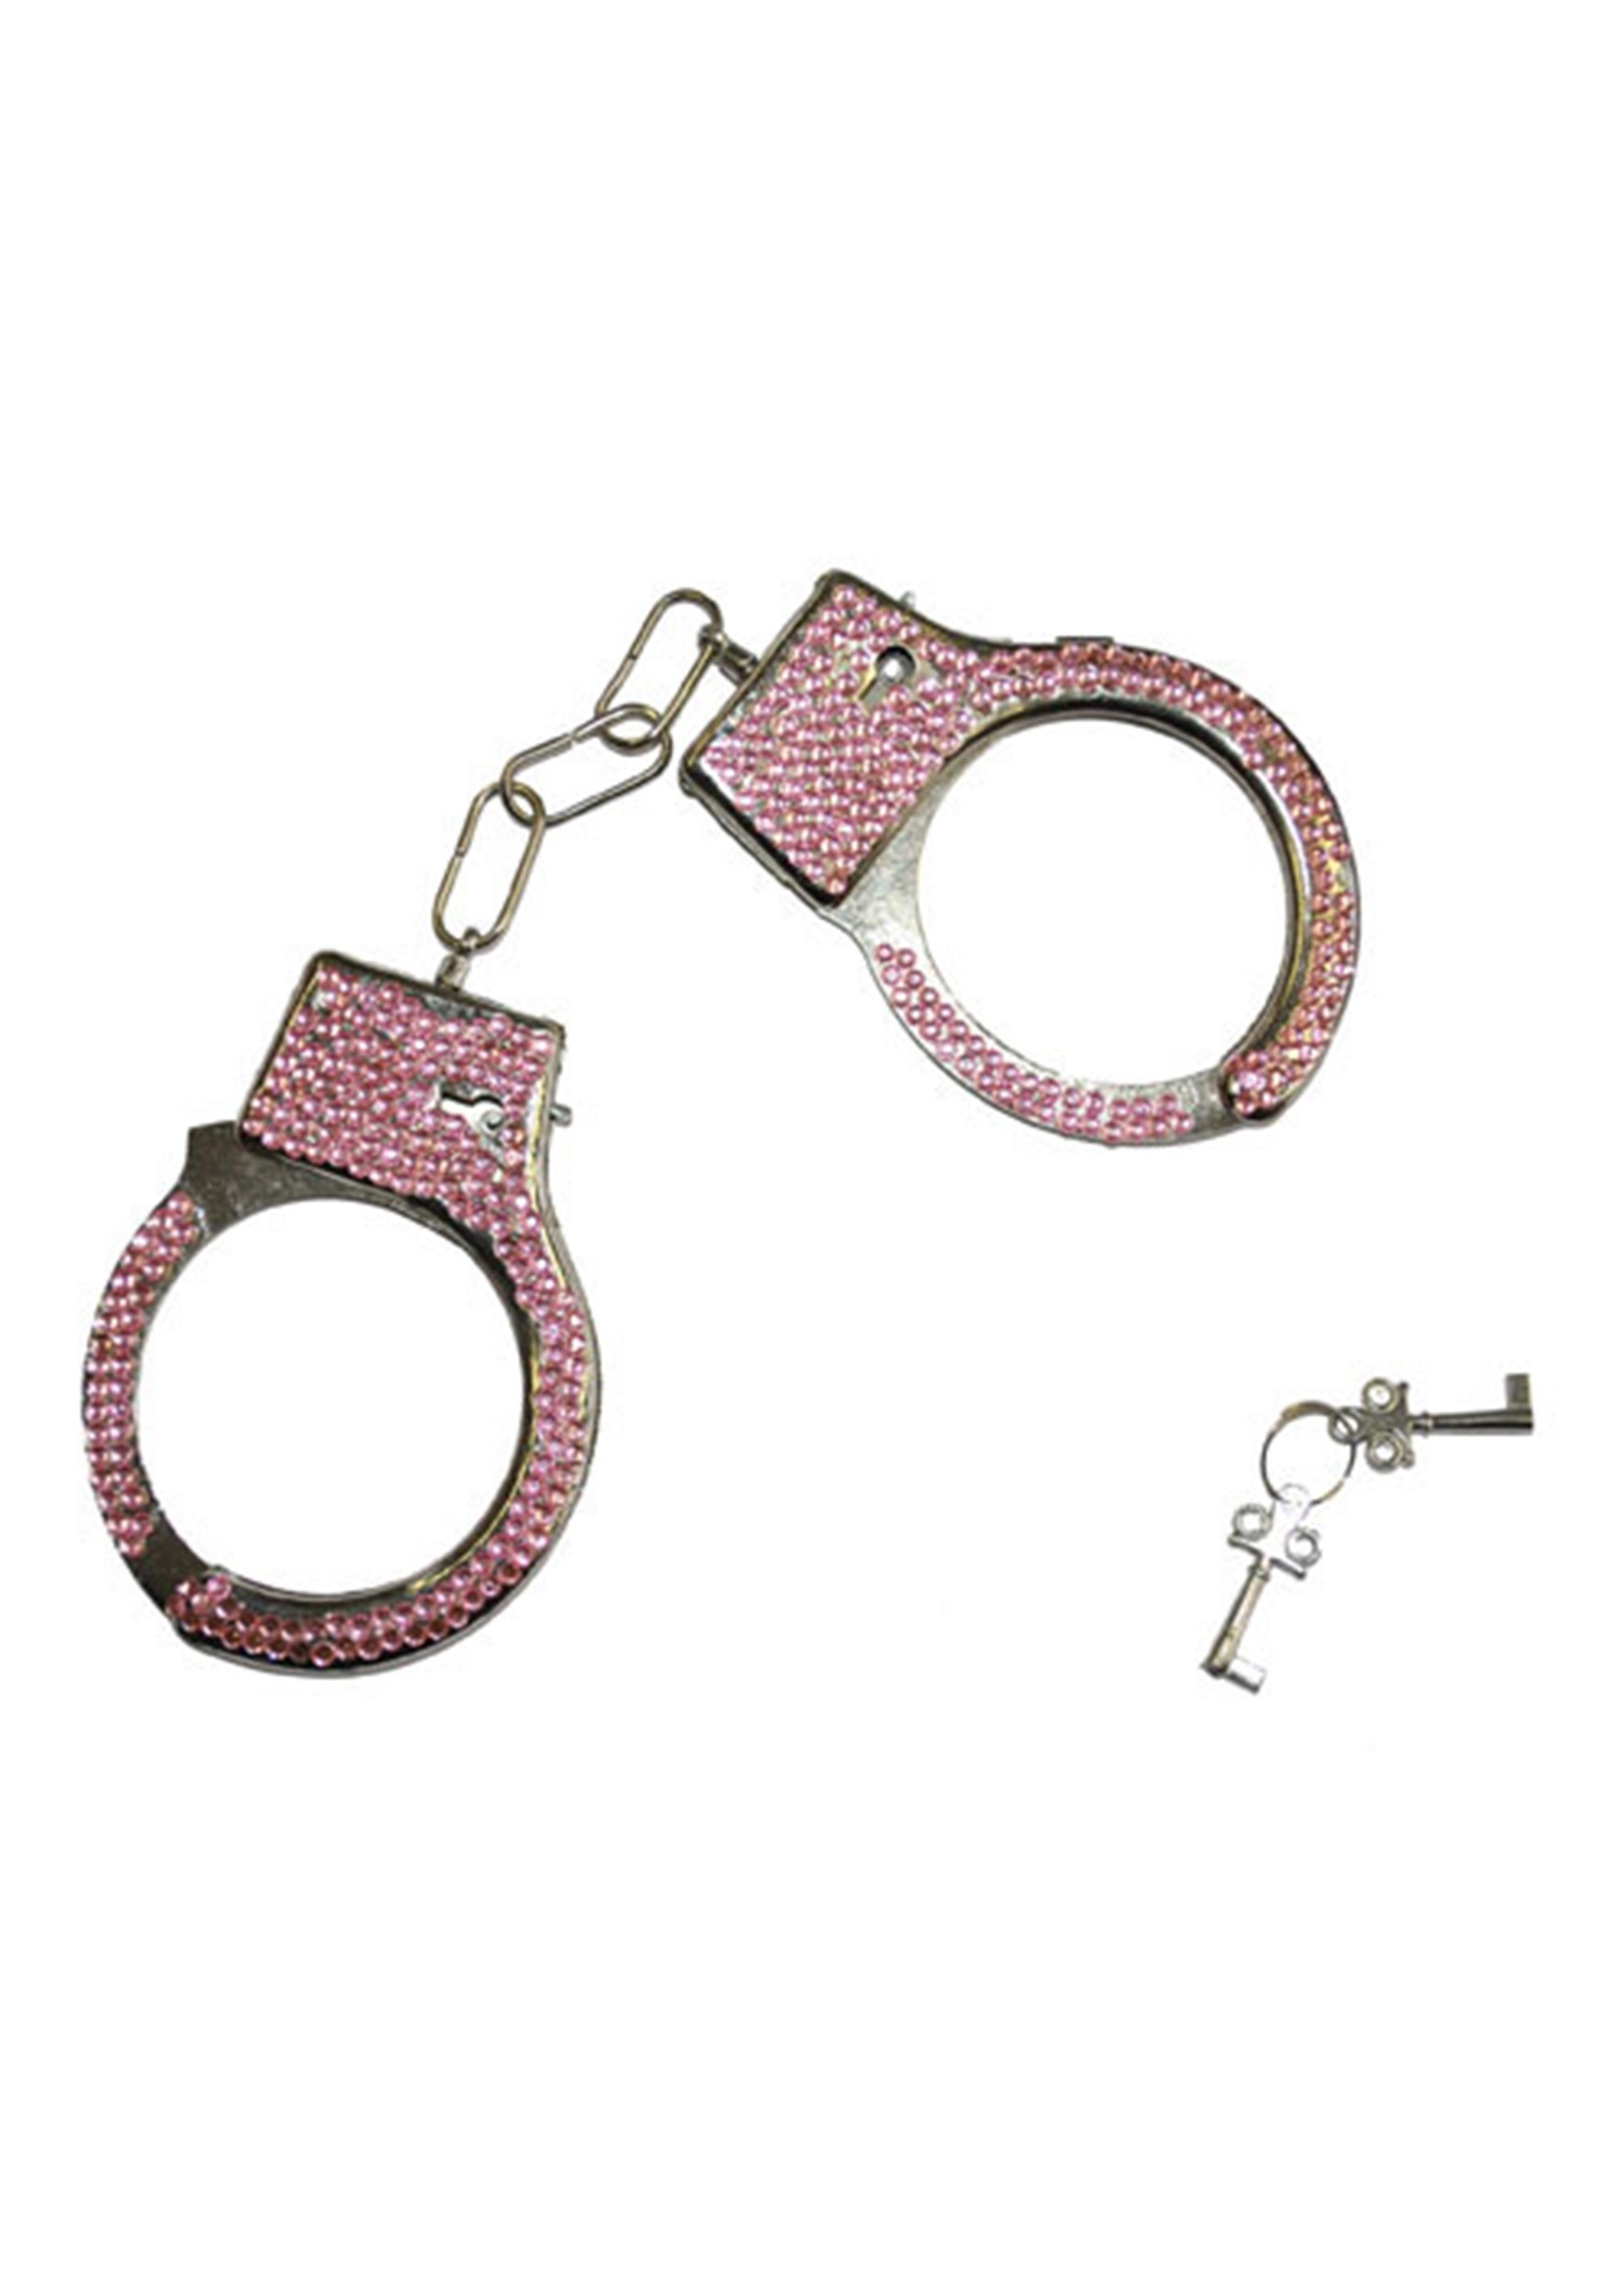 Pink Rhinestone Toy Handcuffs